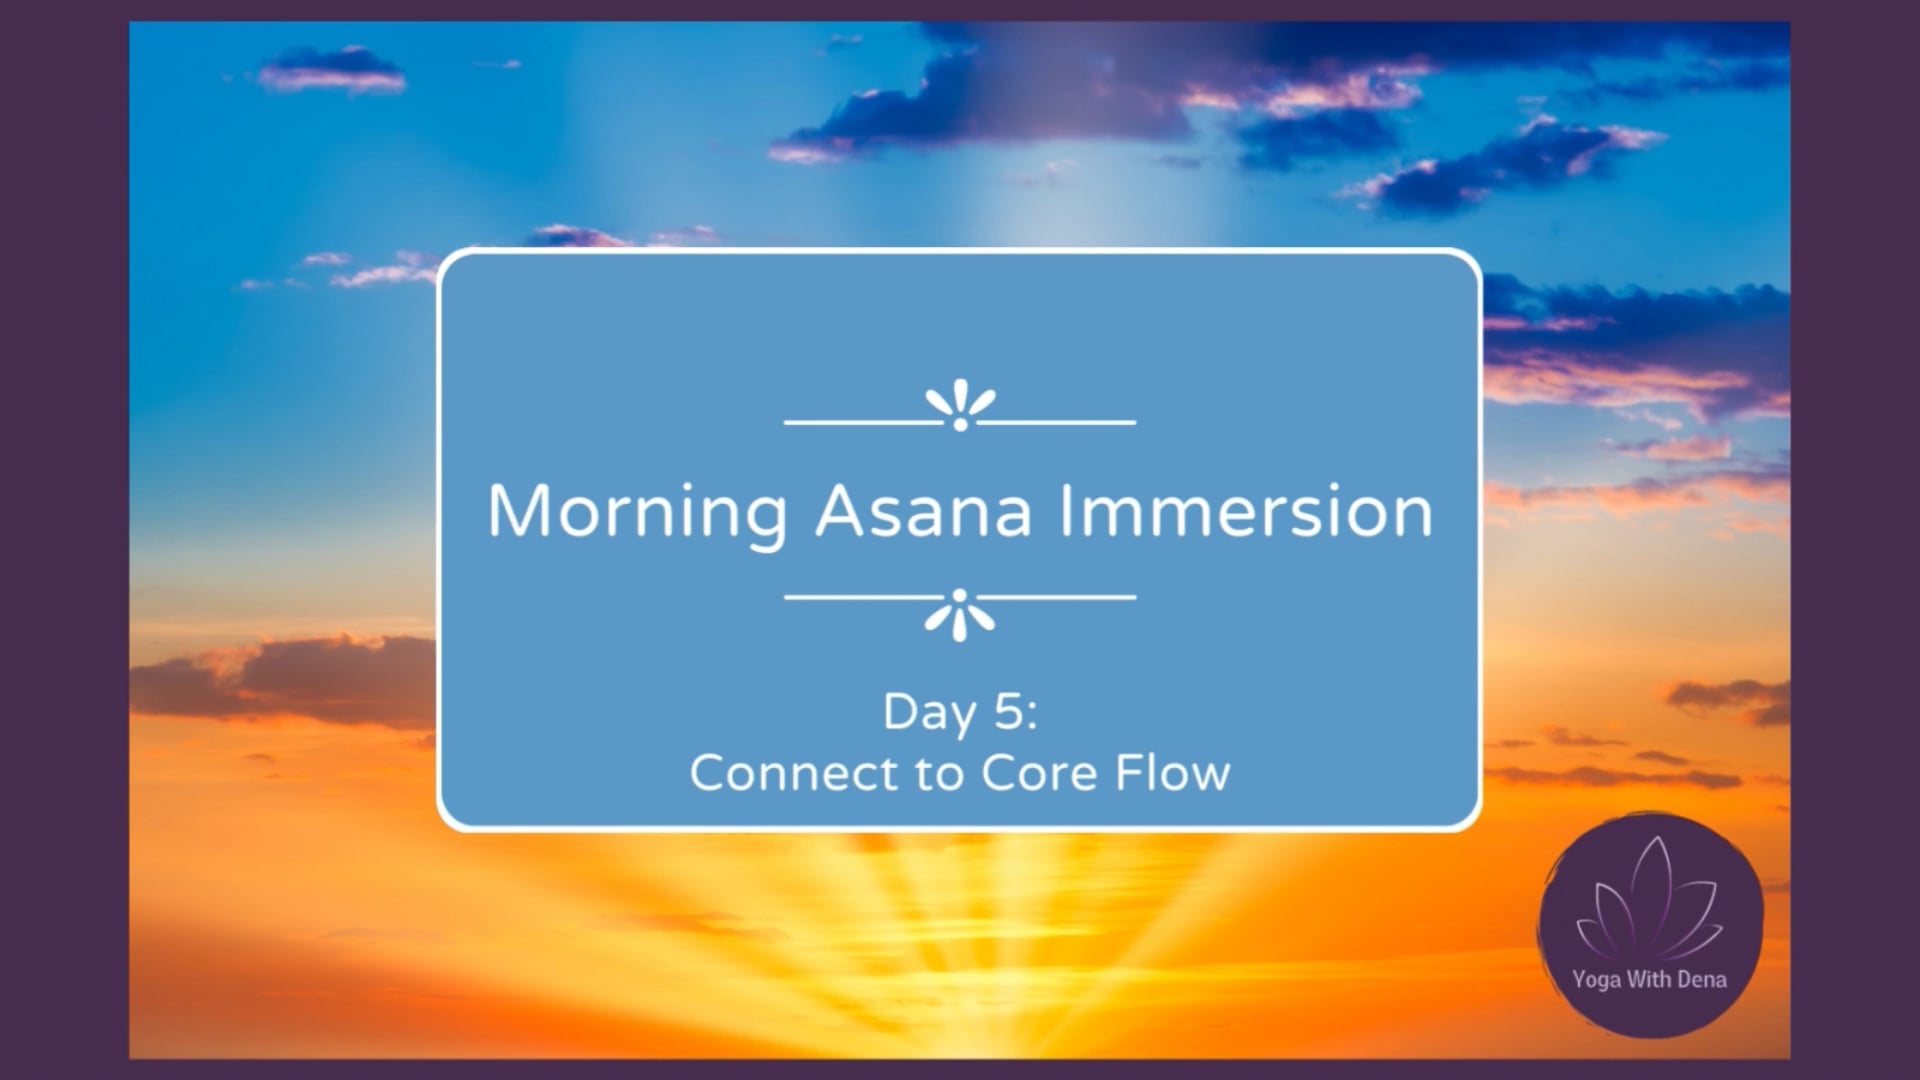 Day 5 - Morning Asana Immersion